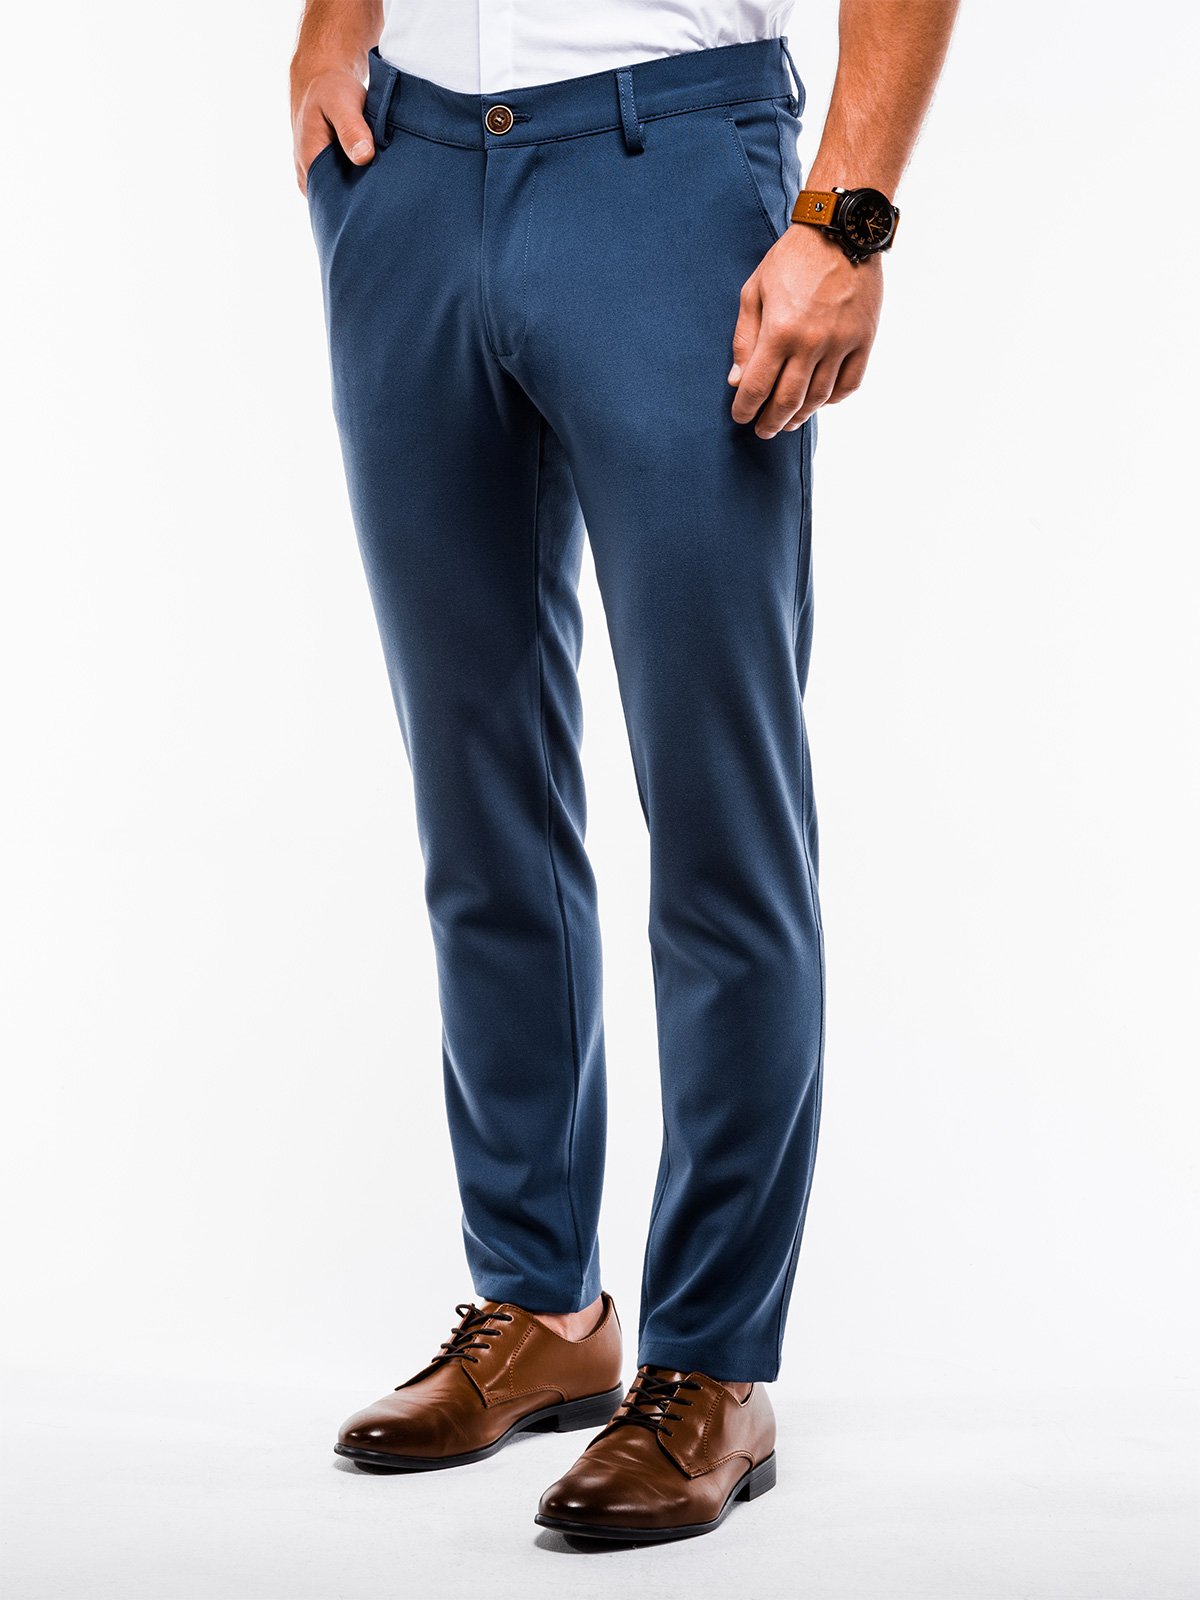 Men's pants chinos P832 - blue | MODONE wholesale - Clothing For Men